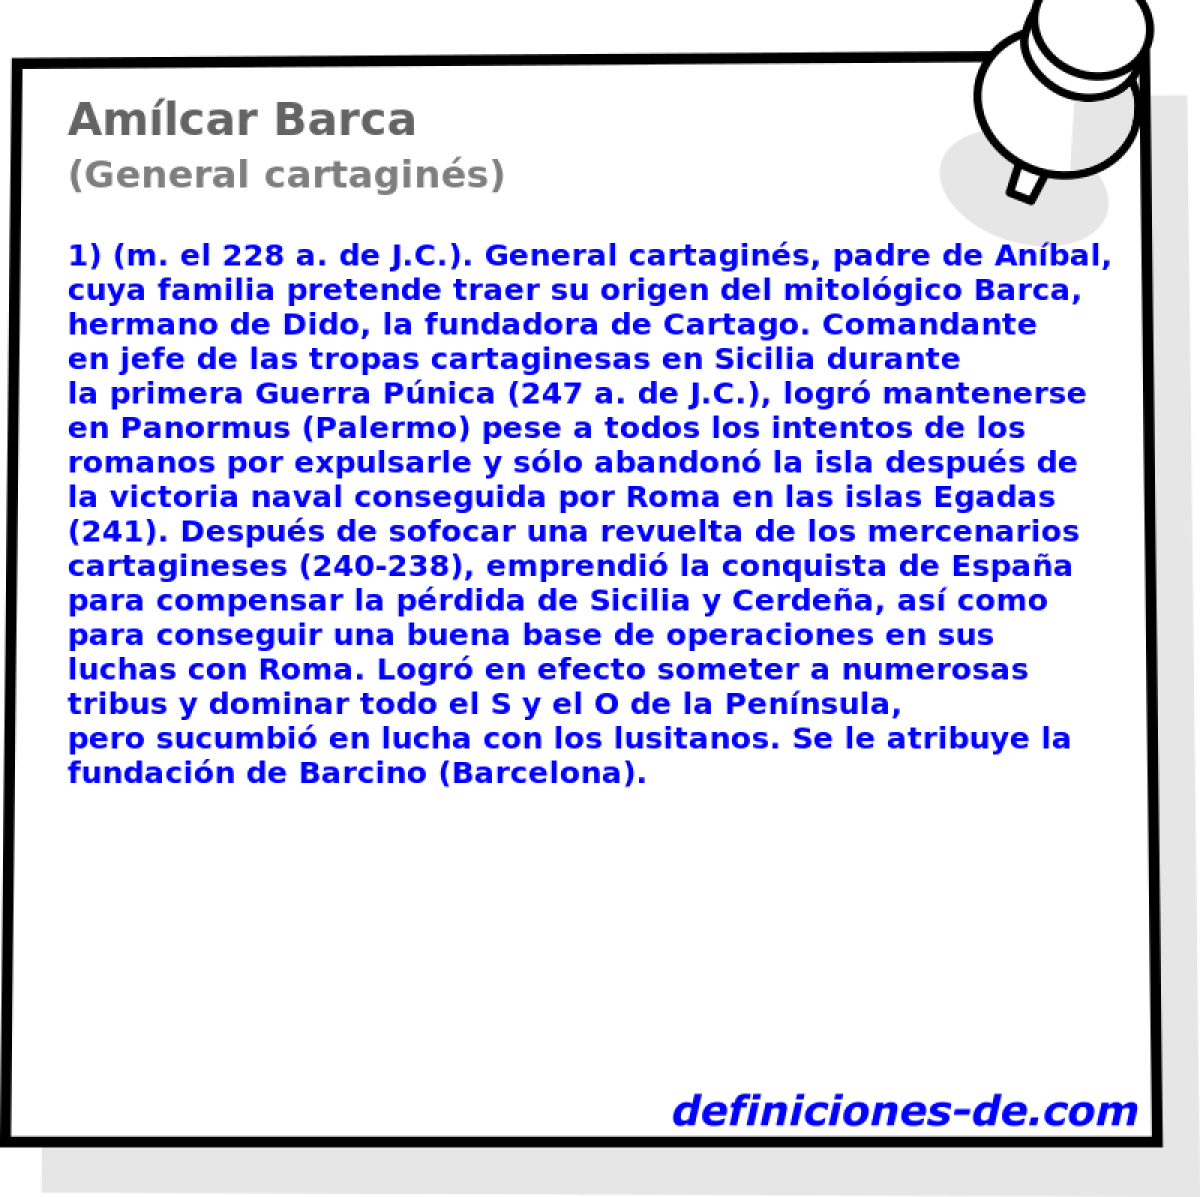 Amlcar Barca (General cartagins)